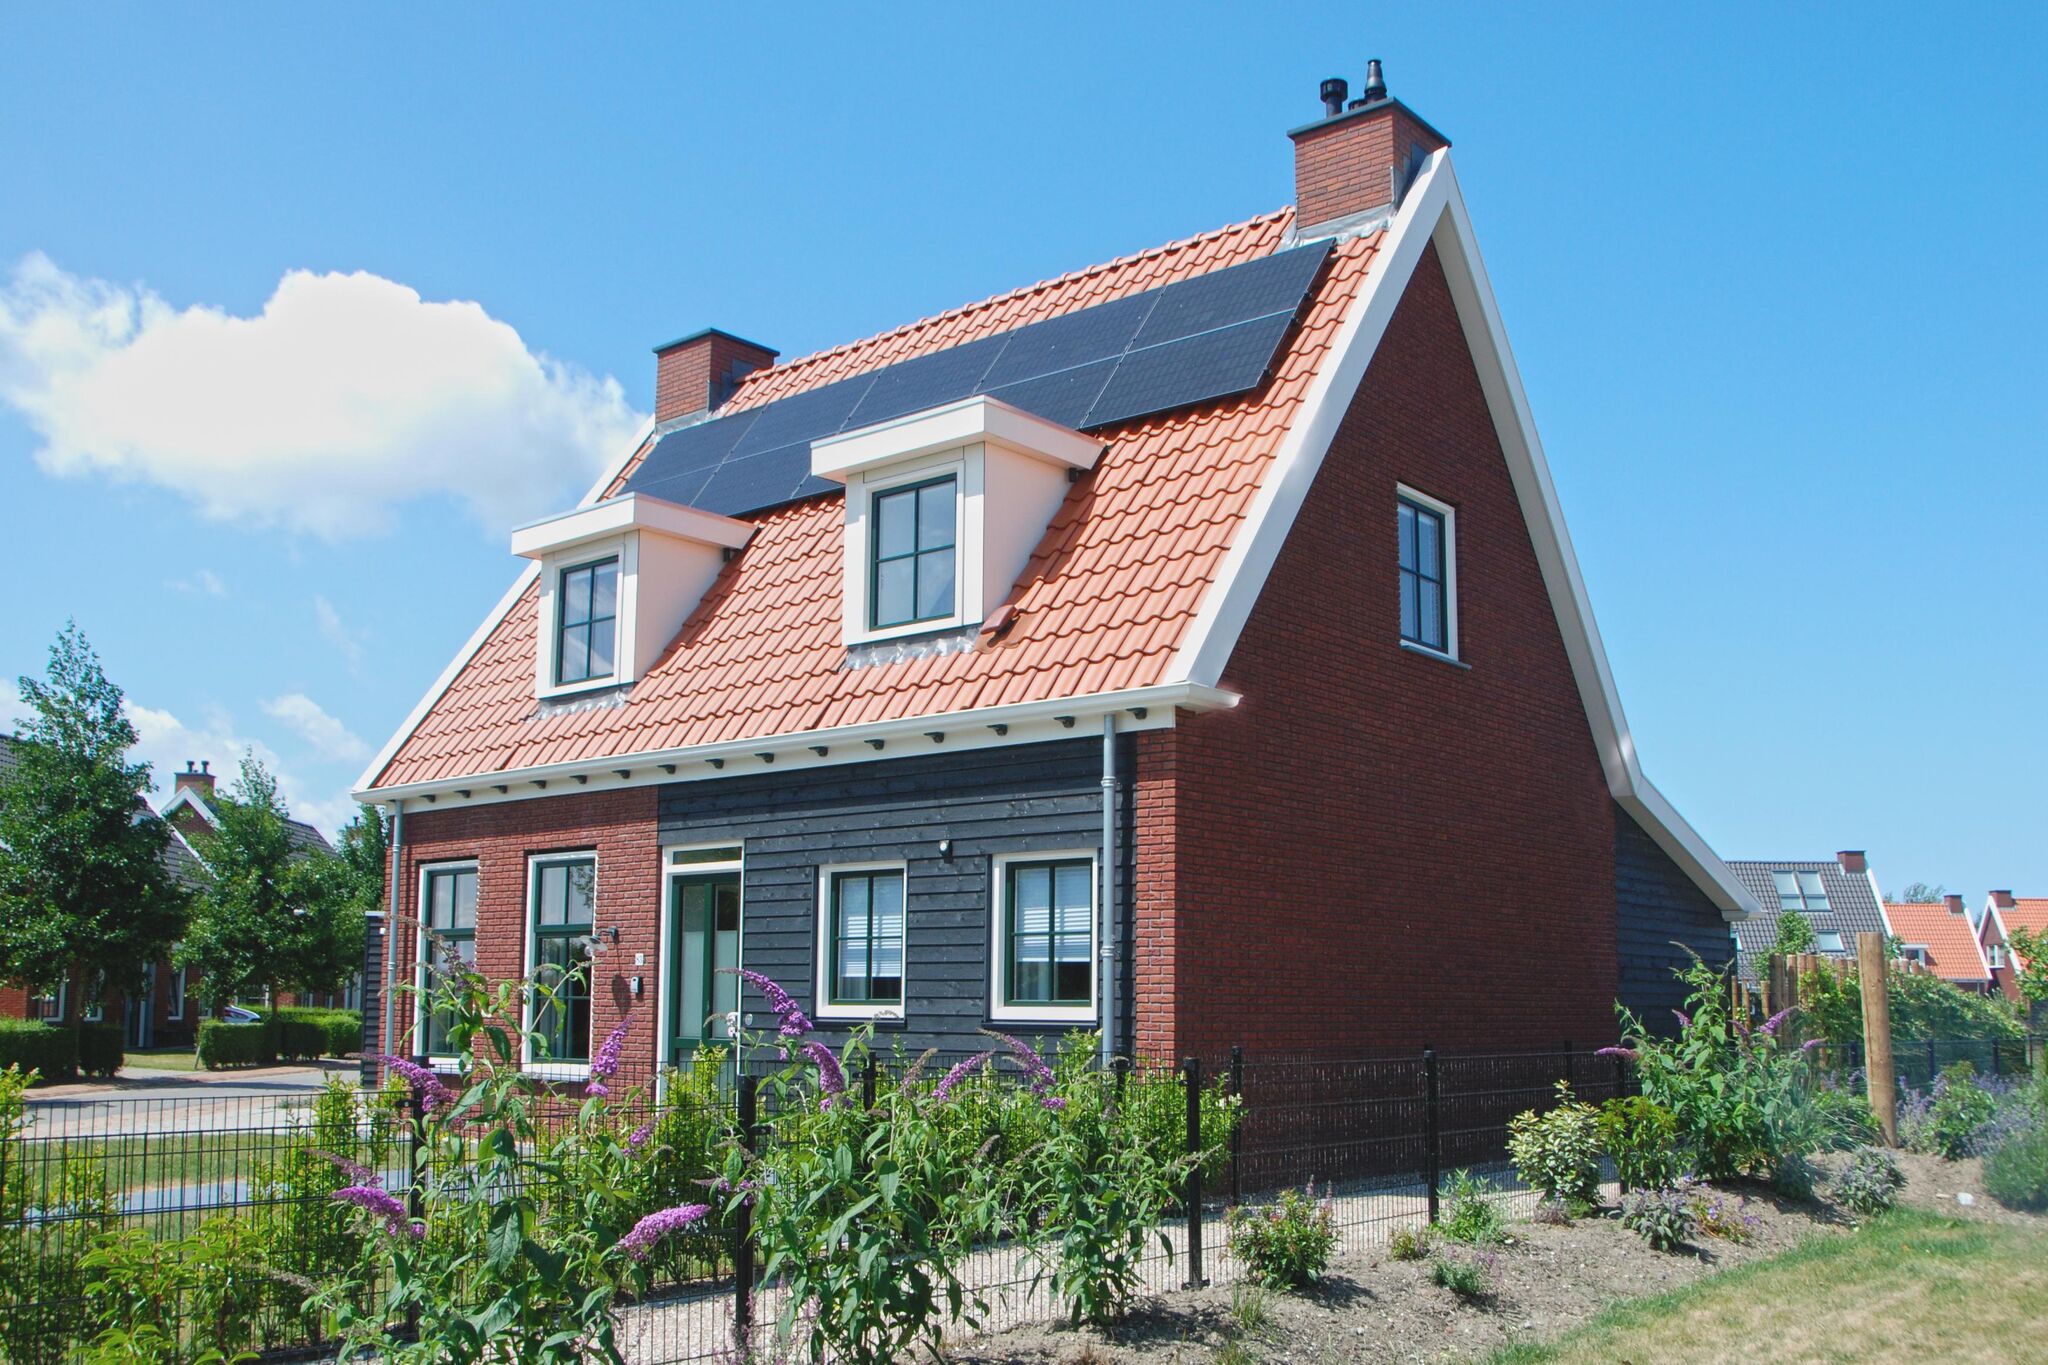 Family villa in the Oosterschelde National Park